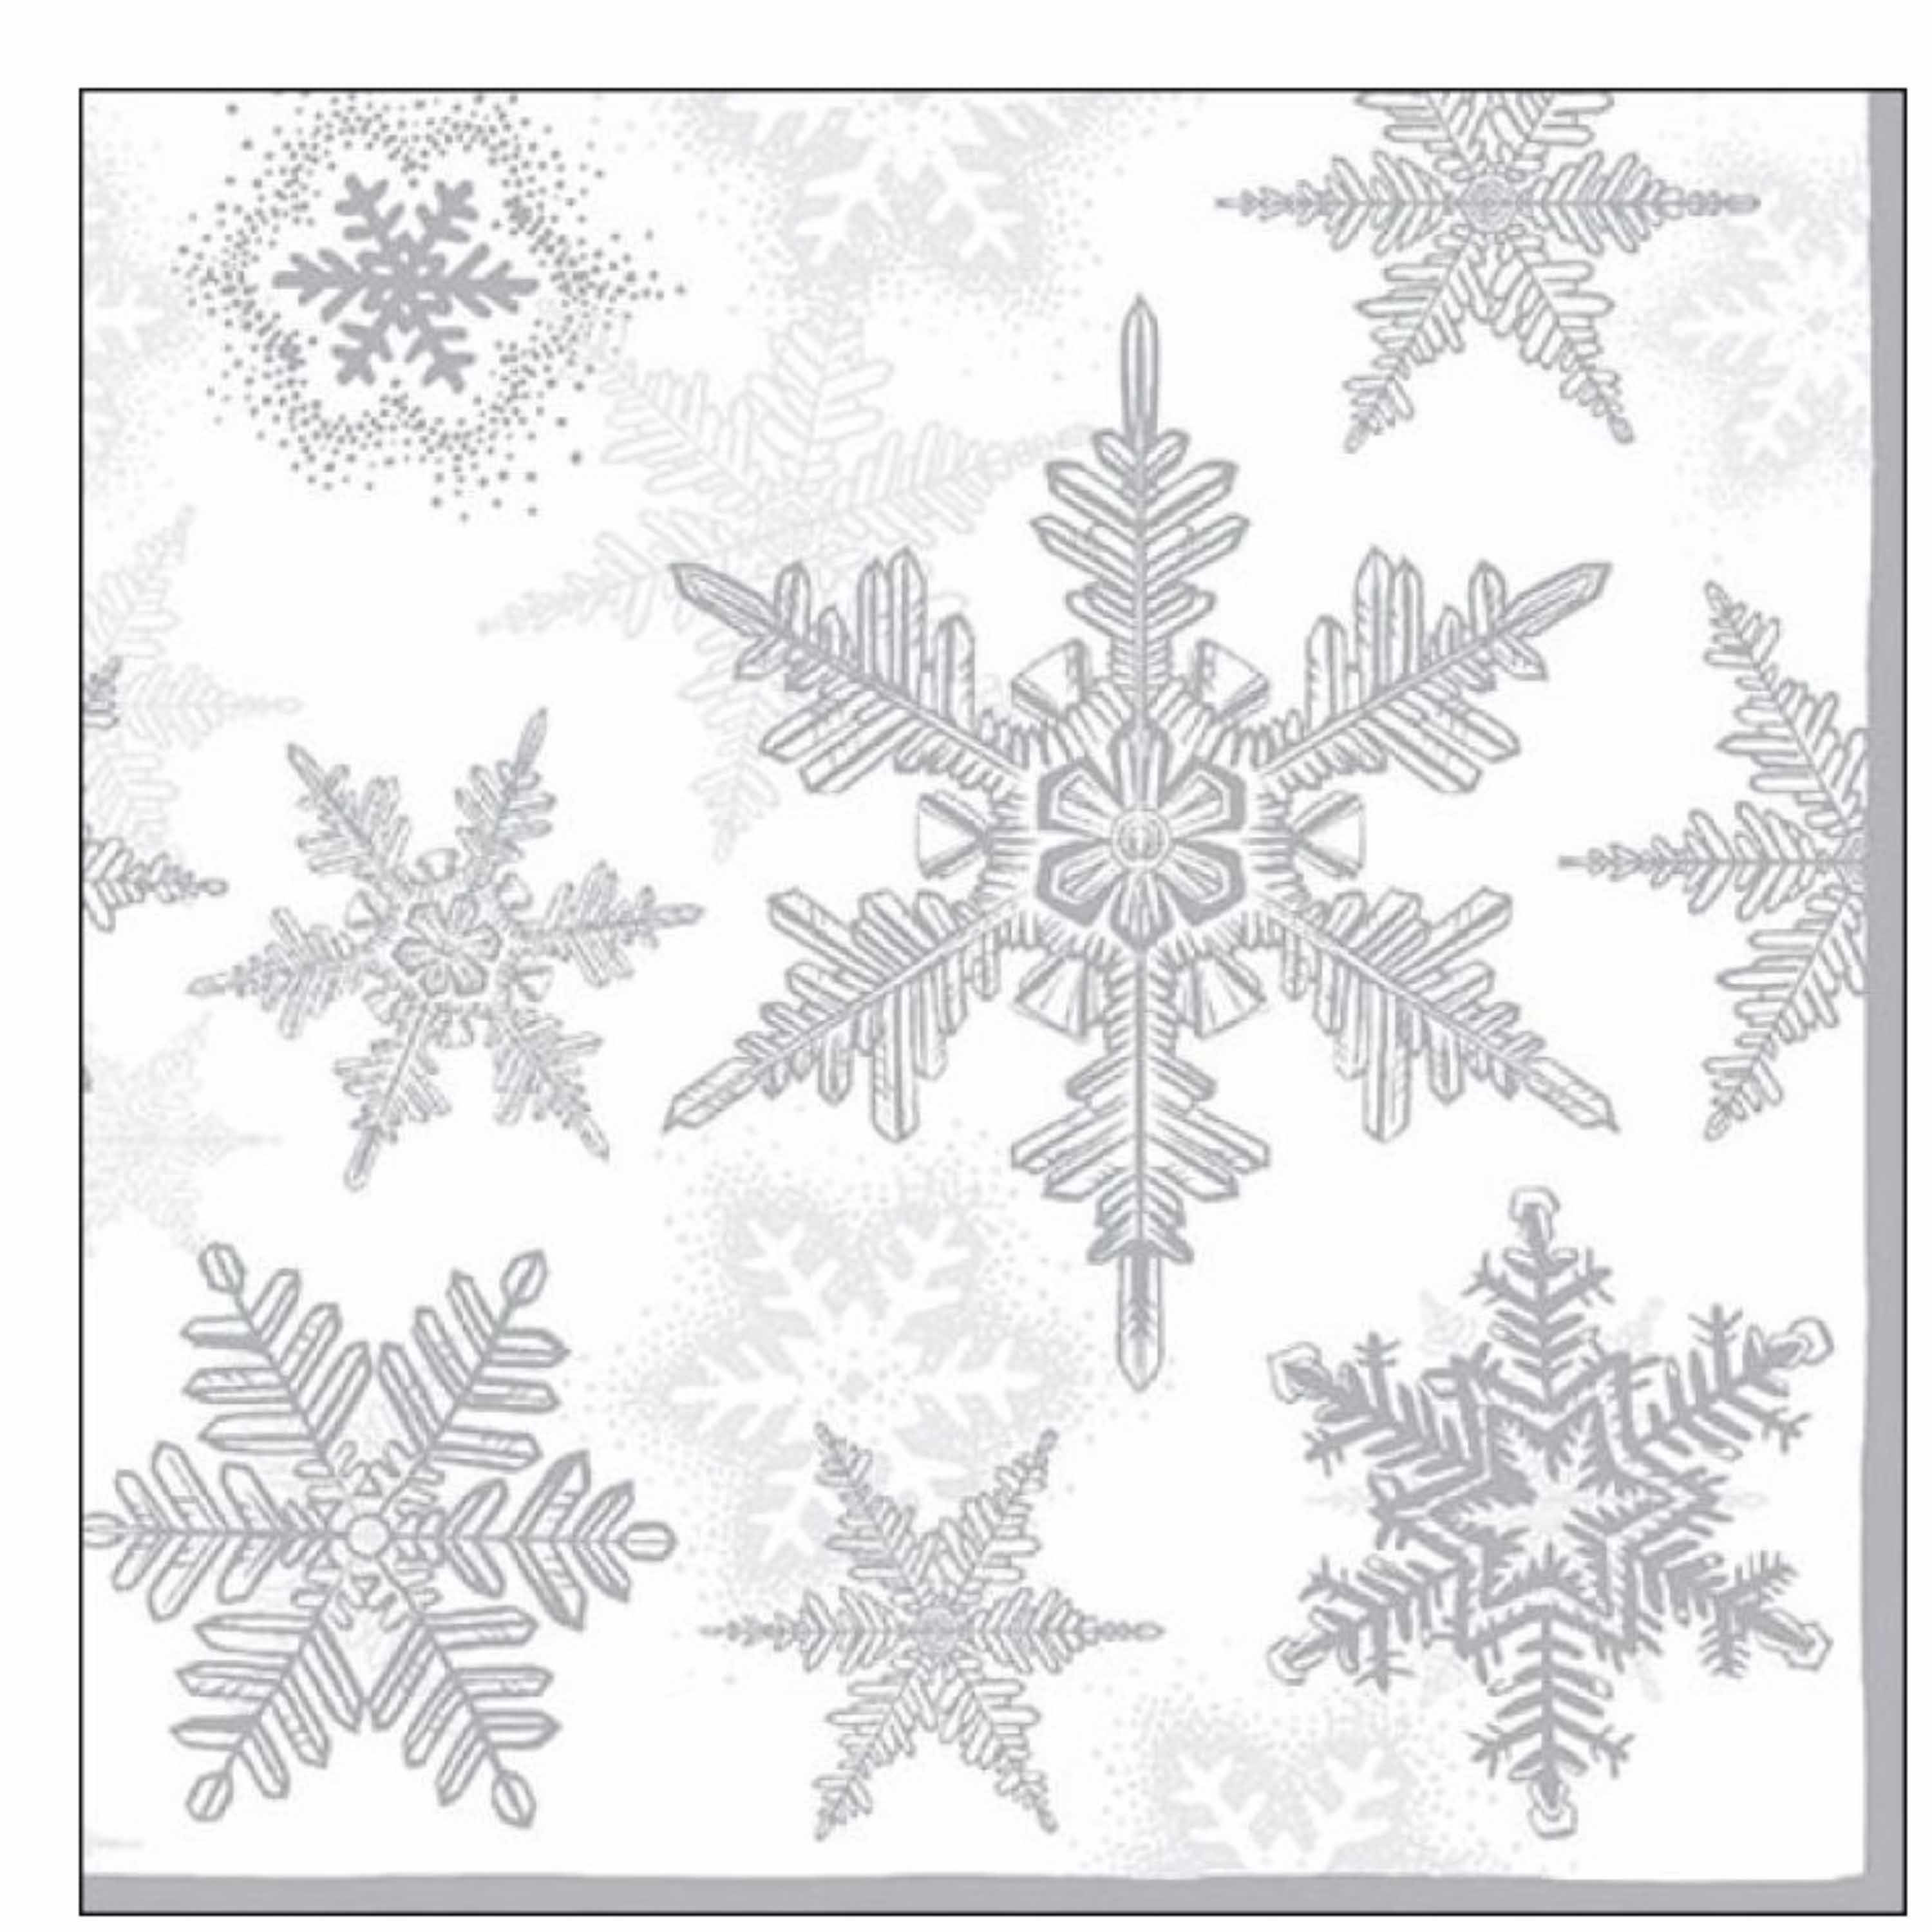 20x Servetten winter sneeuwvlokken thema wit/zilver 33 x 33 cm